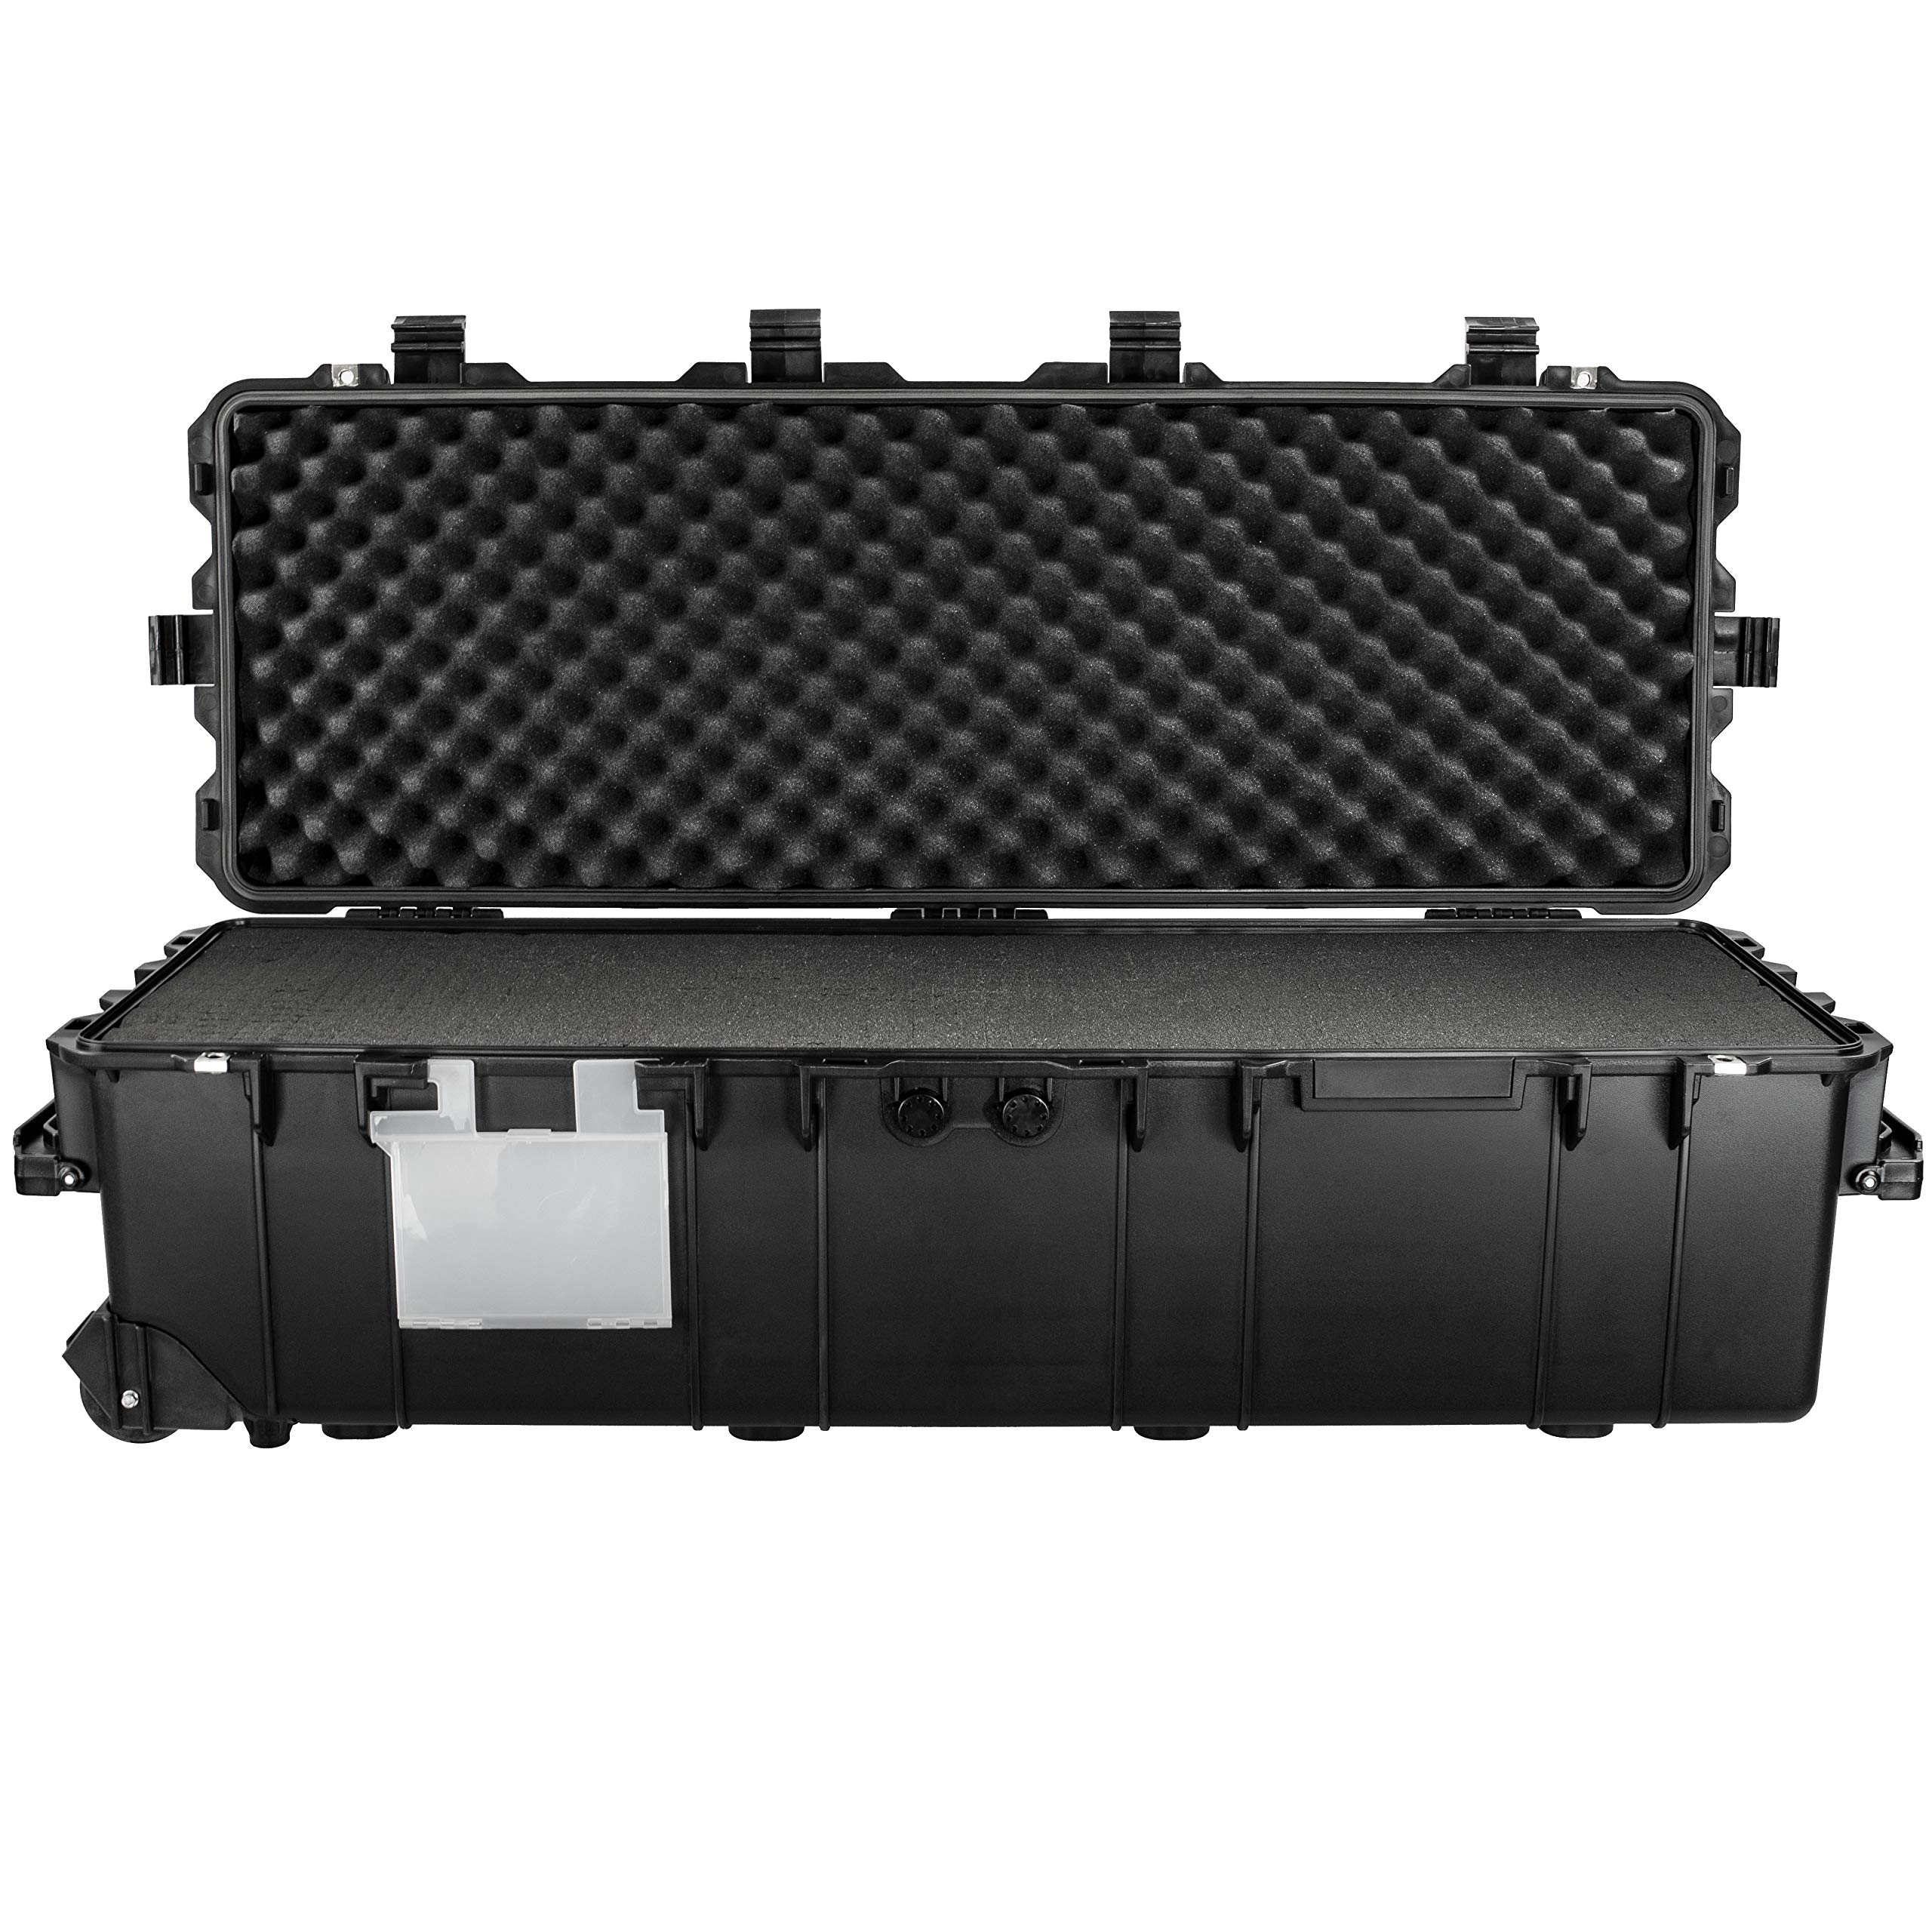 Eylar XXL 44 Inch Deep Heavy Transport Roller Gear, Camera, Tools, Equipment Hard Case Waterproof w/Foam Black